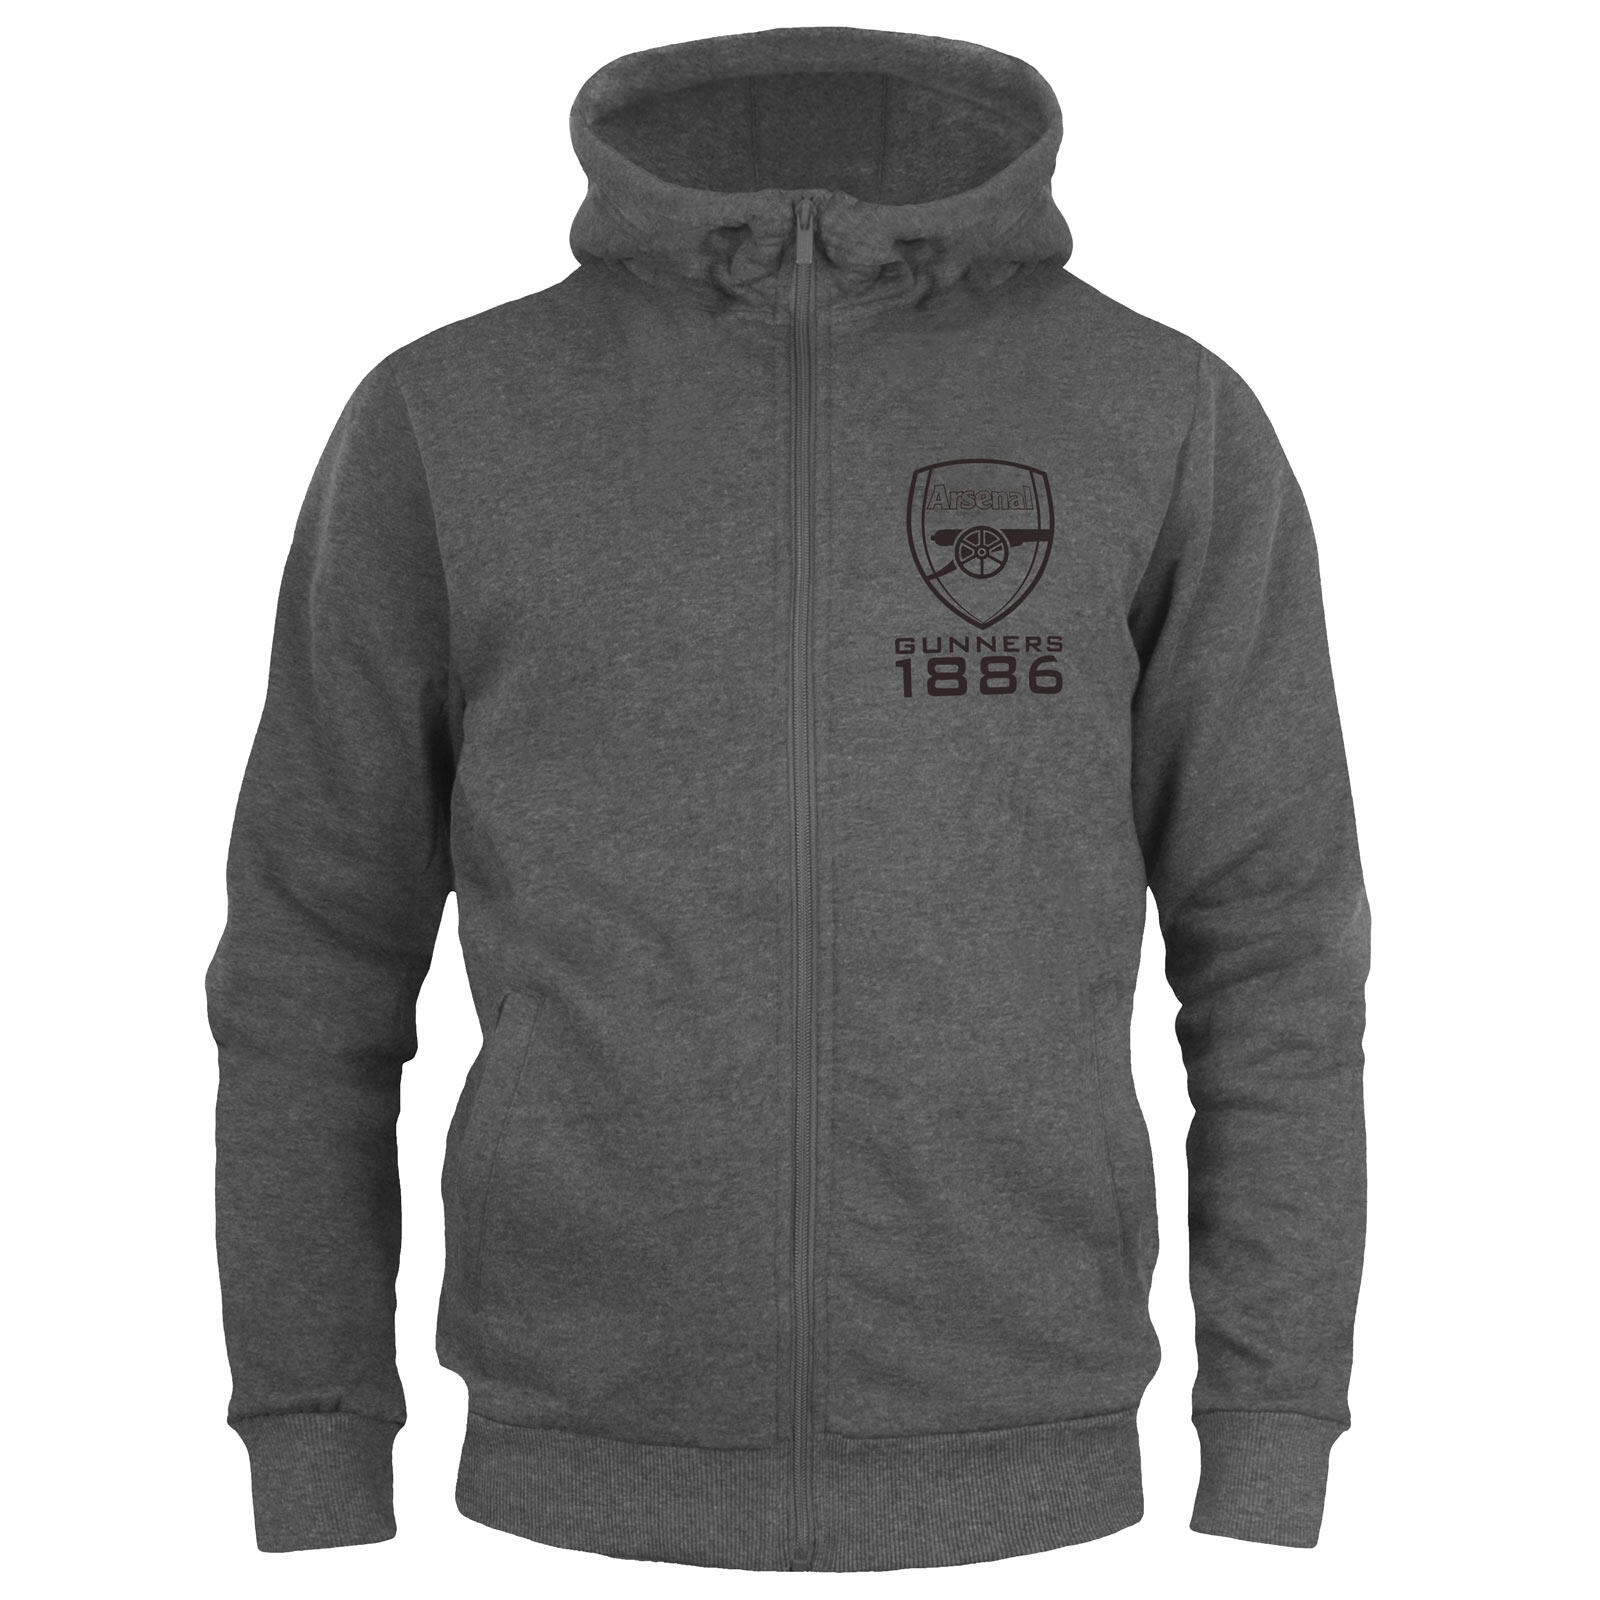 ARSENAL Arsenal FC Boys Hoody Zip Fleece Kids OFFICIAL Football Gift